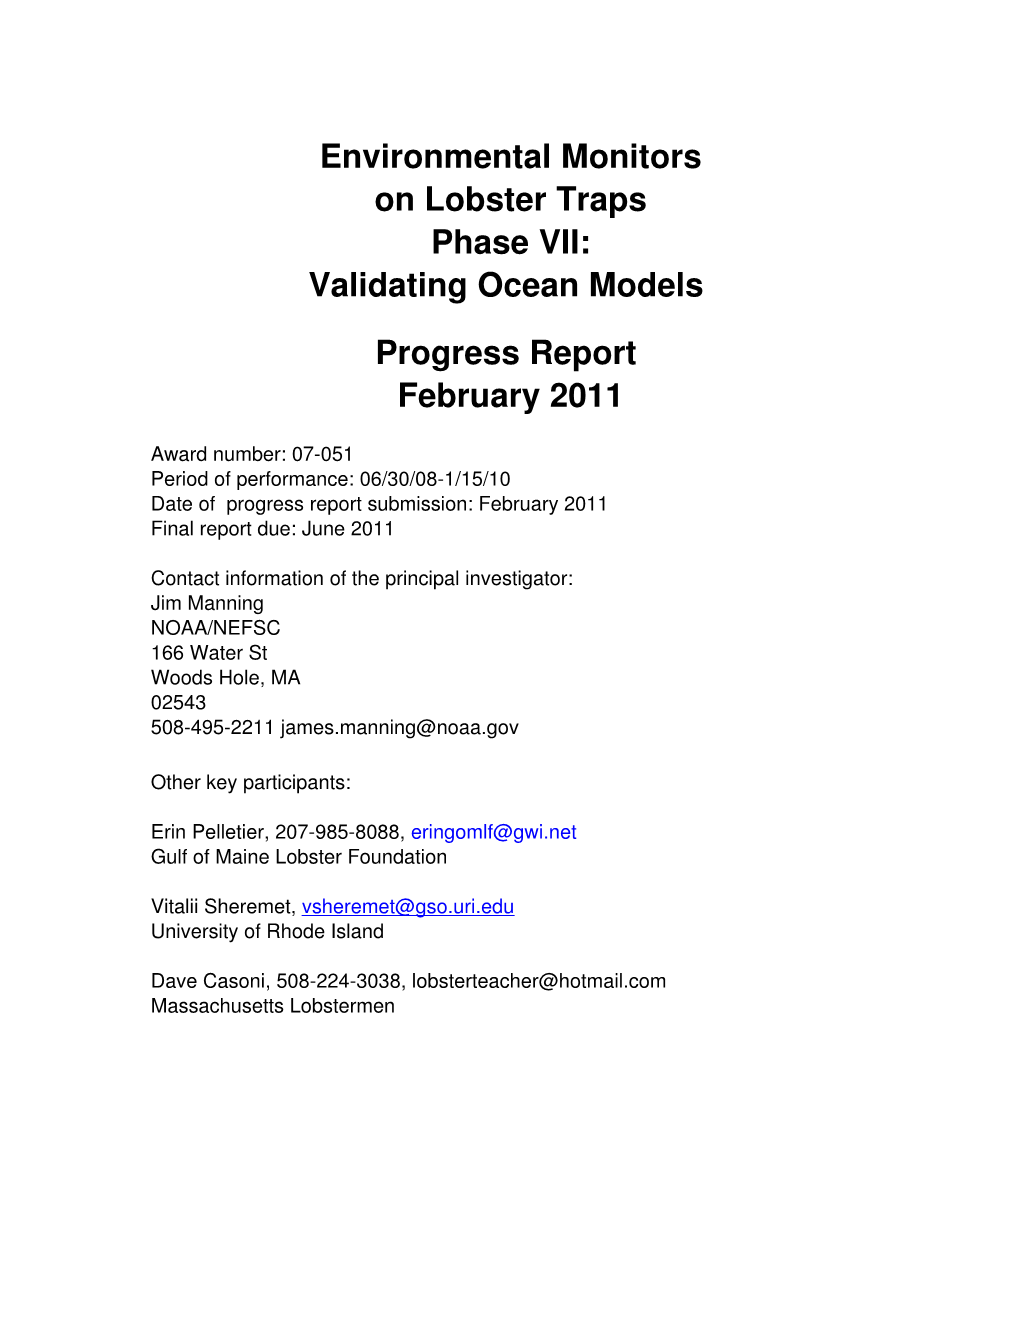 Environmental Monitors on Lobster Traps Phase VII: Validating Ocean Models